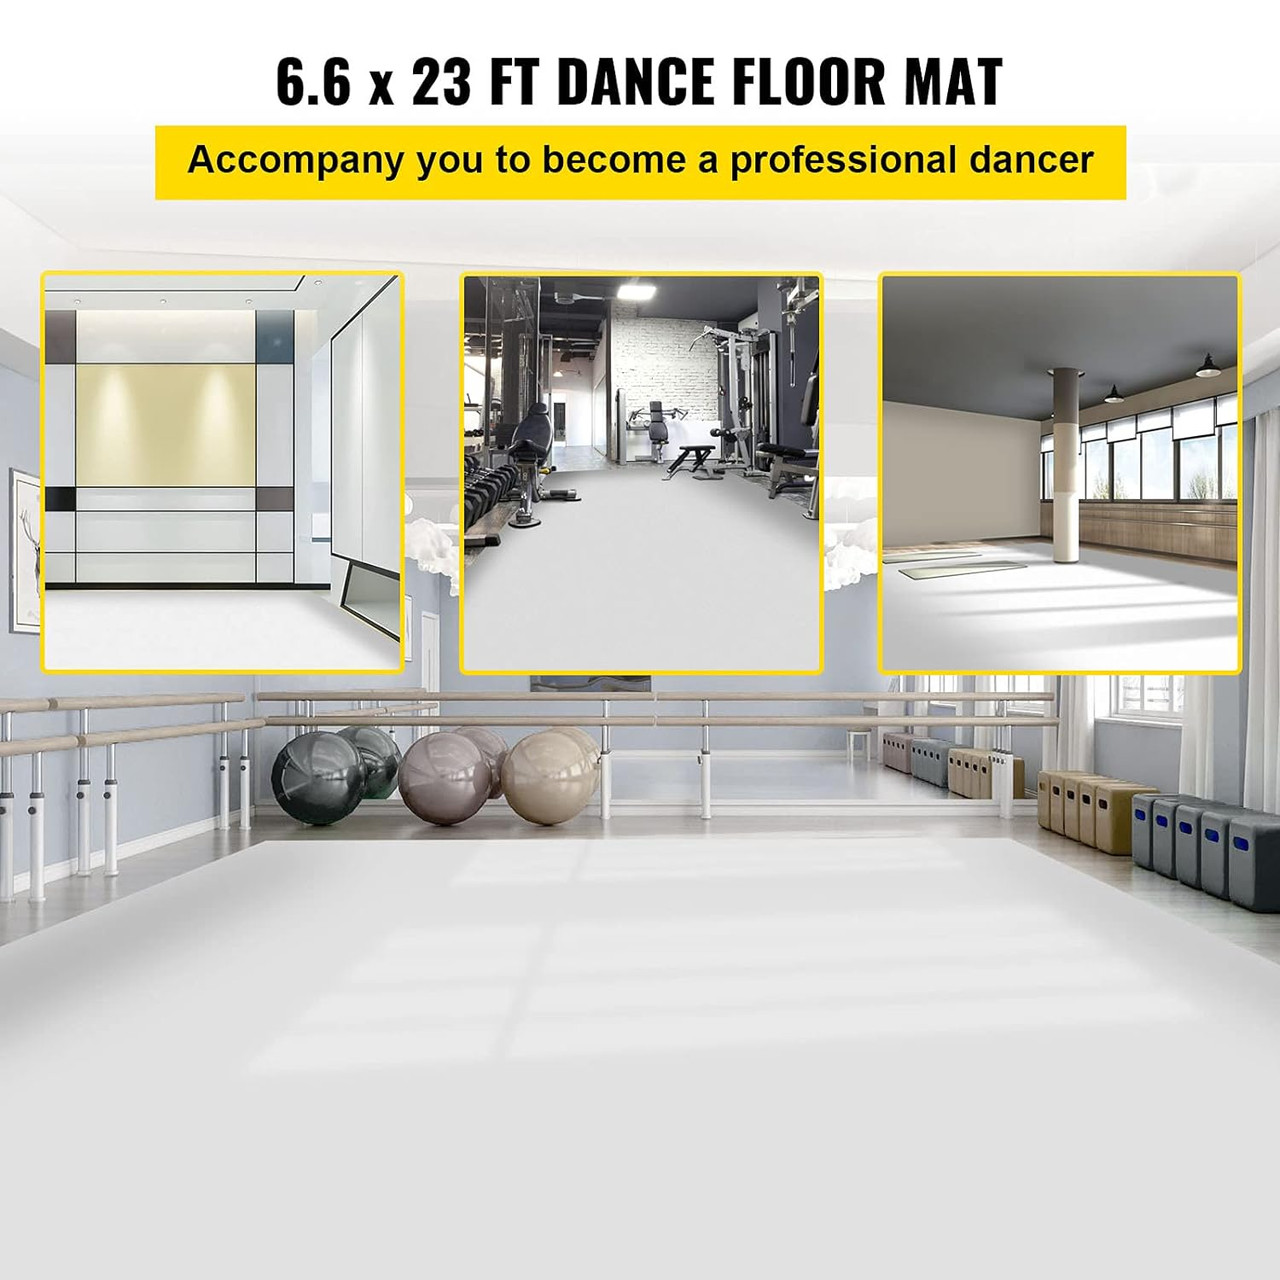 Dance Floor, 6.6x23ft Dance Floor Roll, 0.06in Thick PVC Vinyl Dance Floor, Black/White Reversible Portable Dance Floor, Non-Slip Dance Flooring,